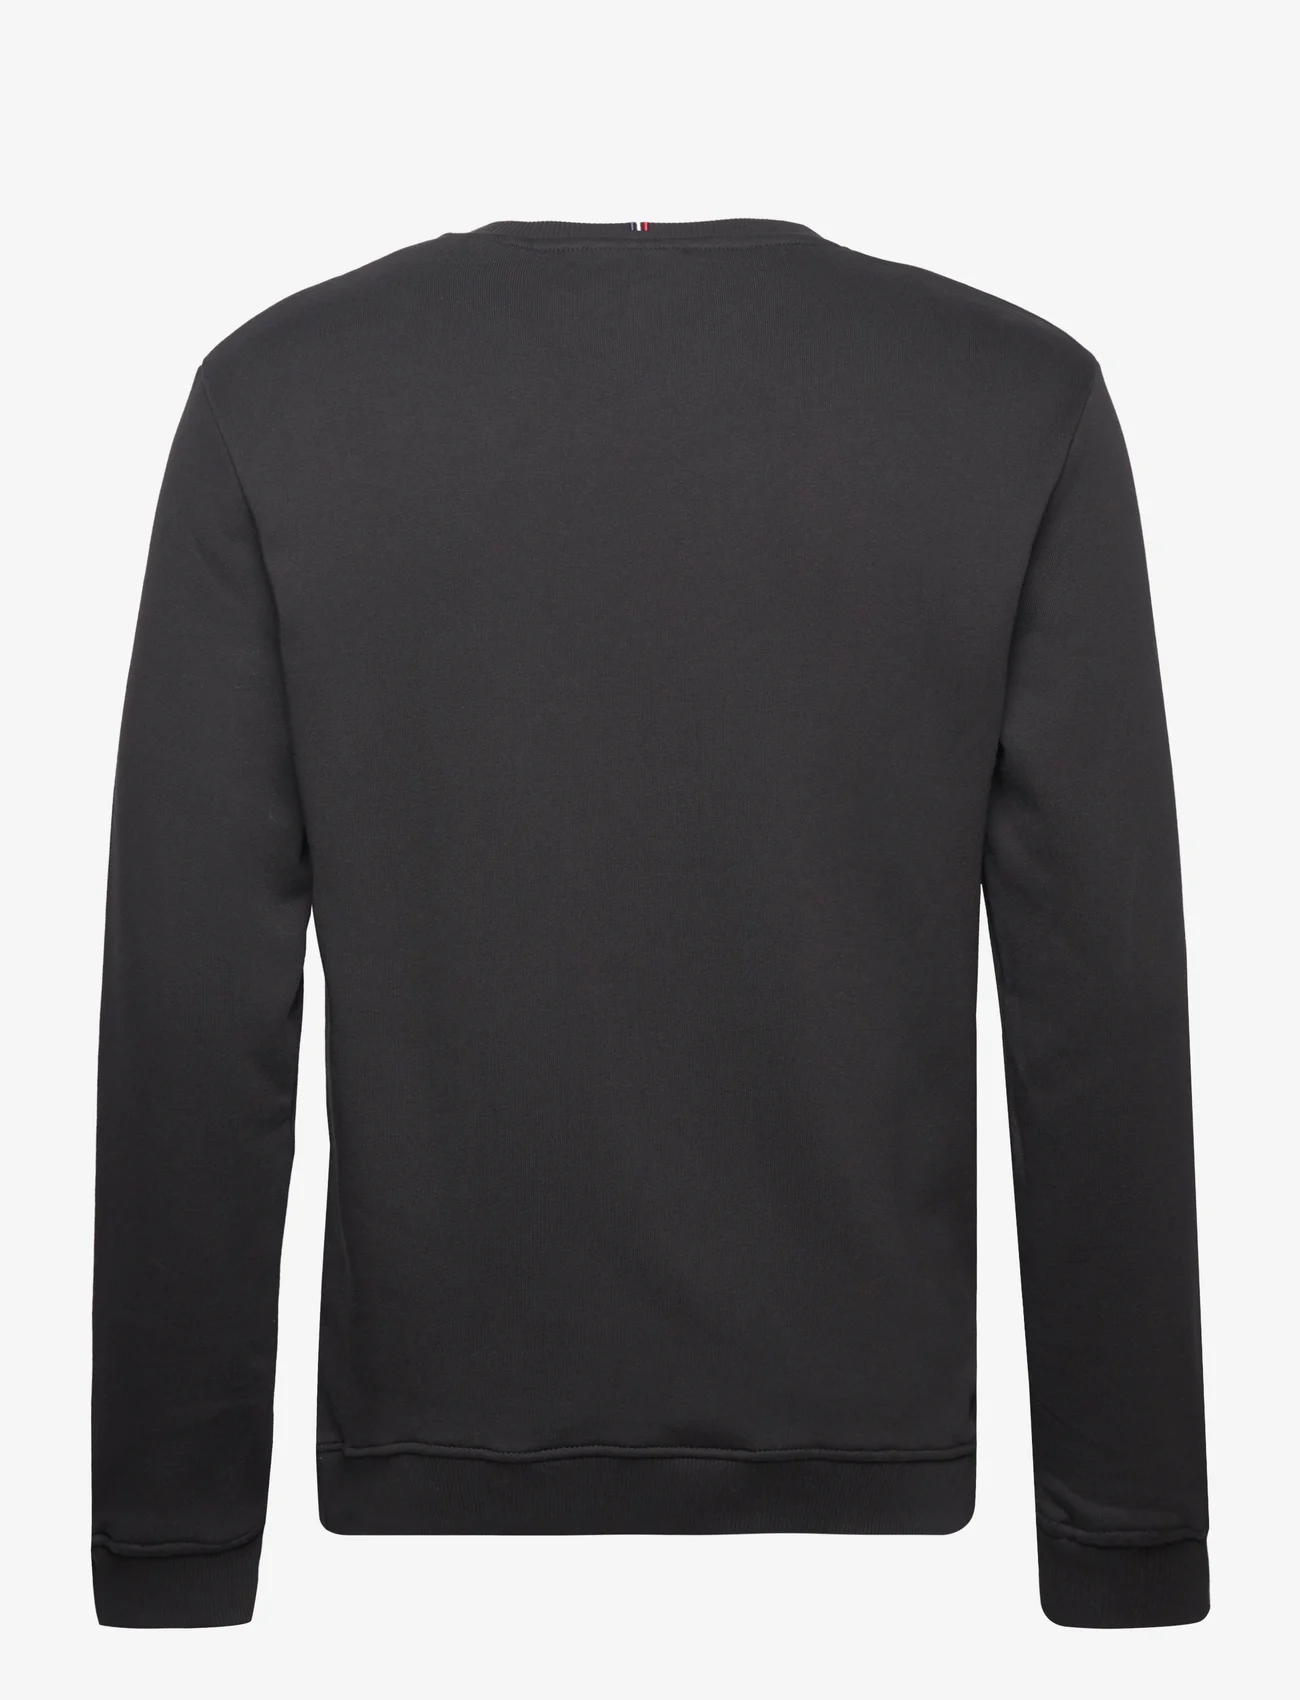 Les Deux - Les Deux II Sweatshirt 2.0 - sweatshirts - black/platinum - 1